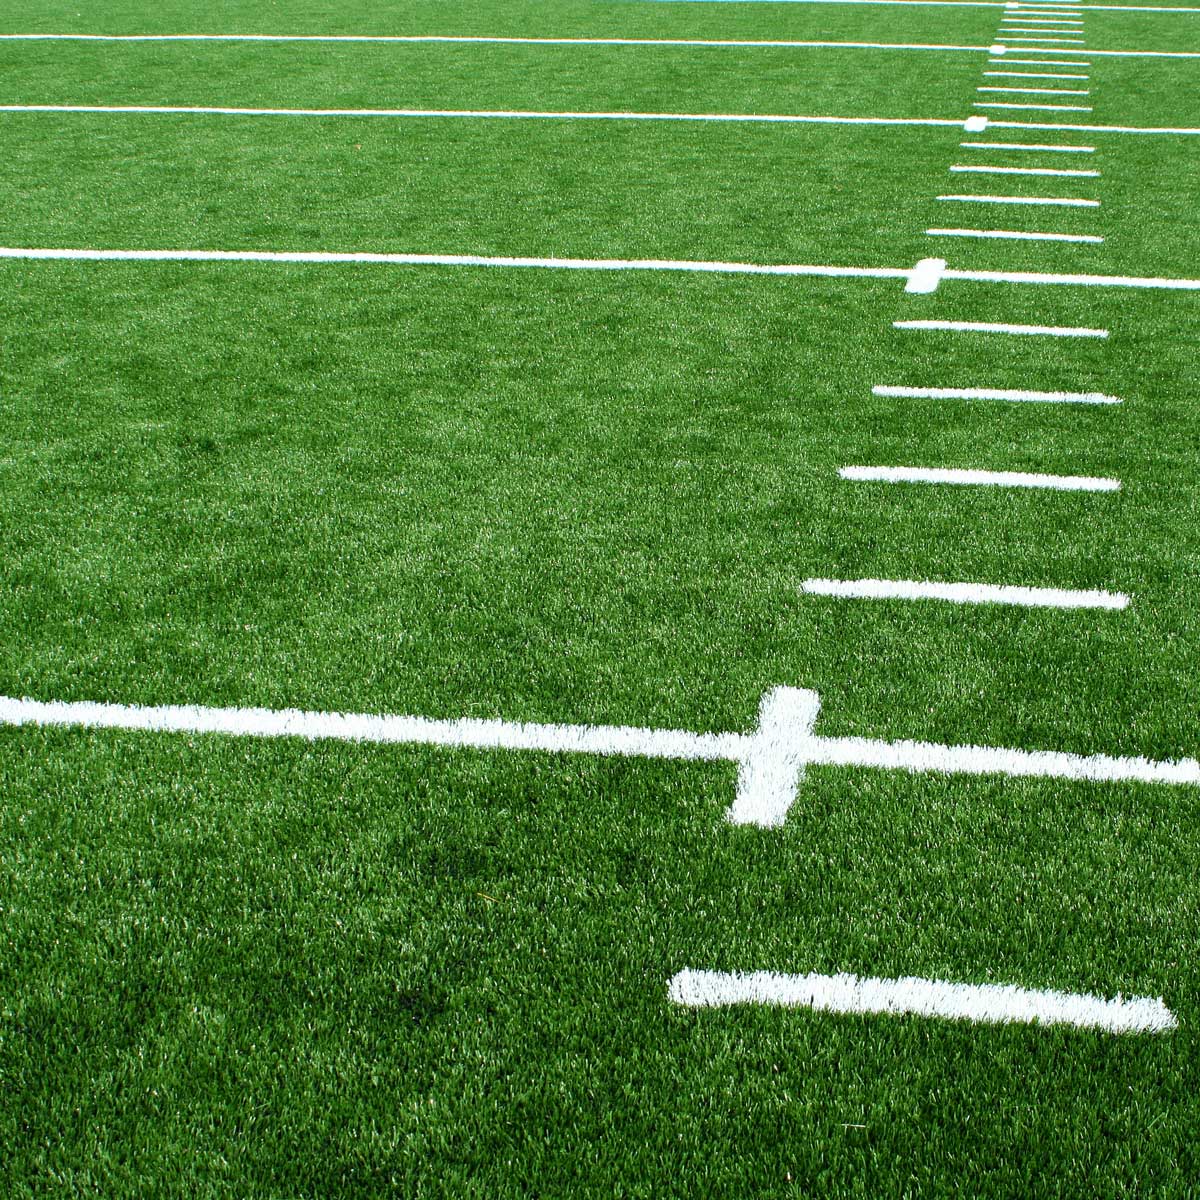 Astro-turf-football-field-close-up